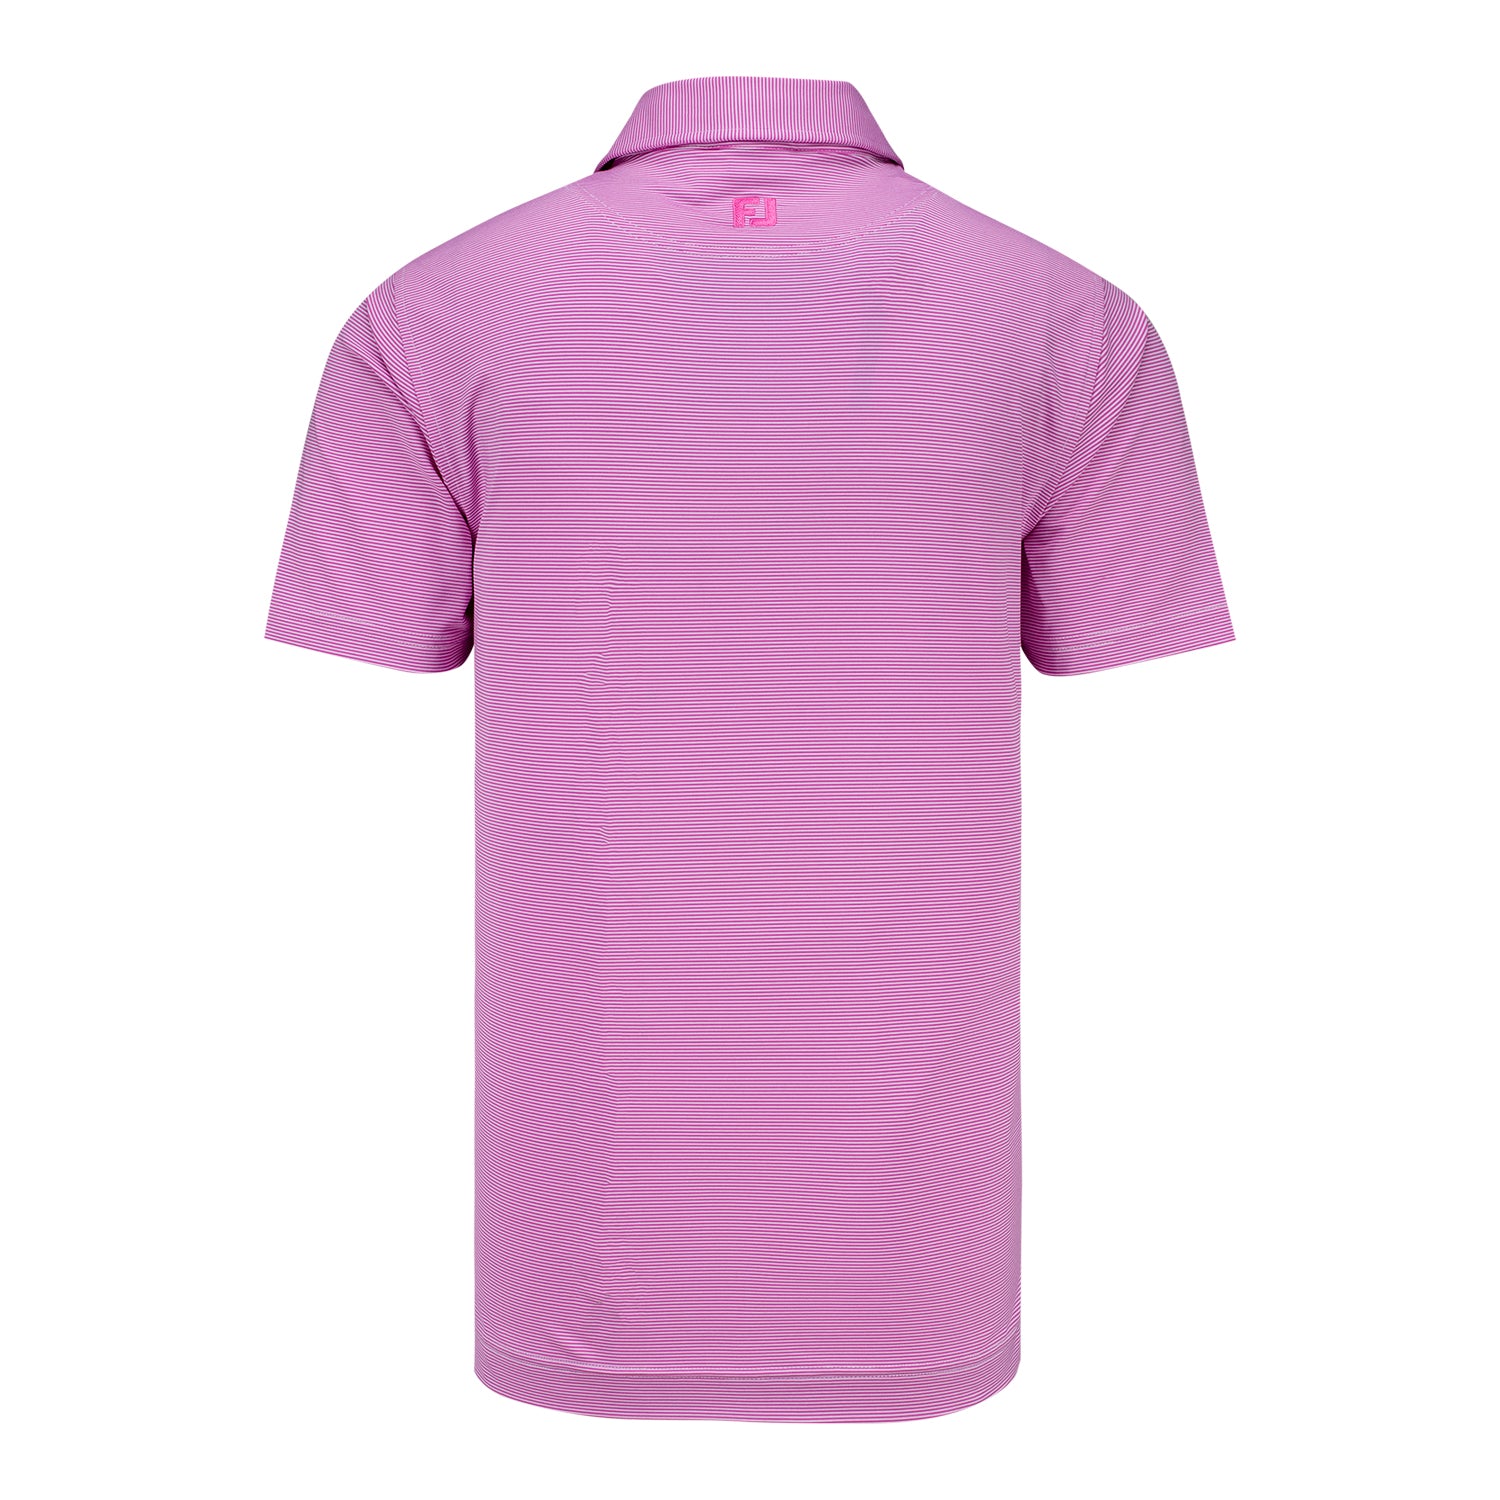 FootJoy 2025 PGA Championship Microstripe Polo in Pink/White - Front View